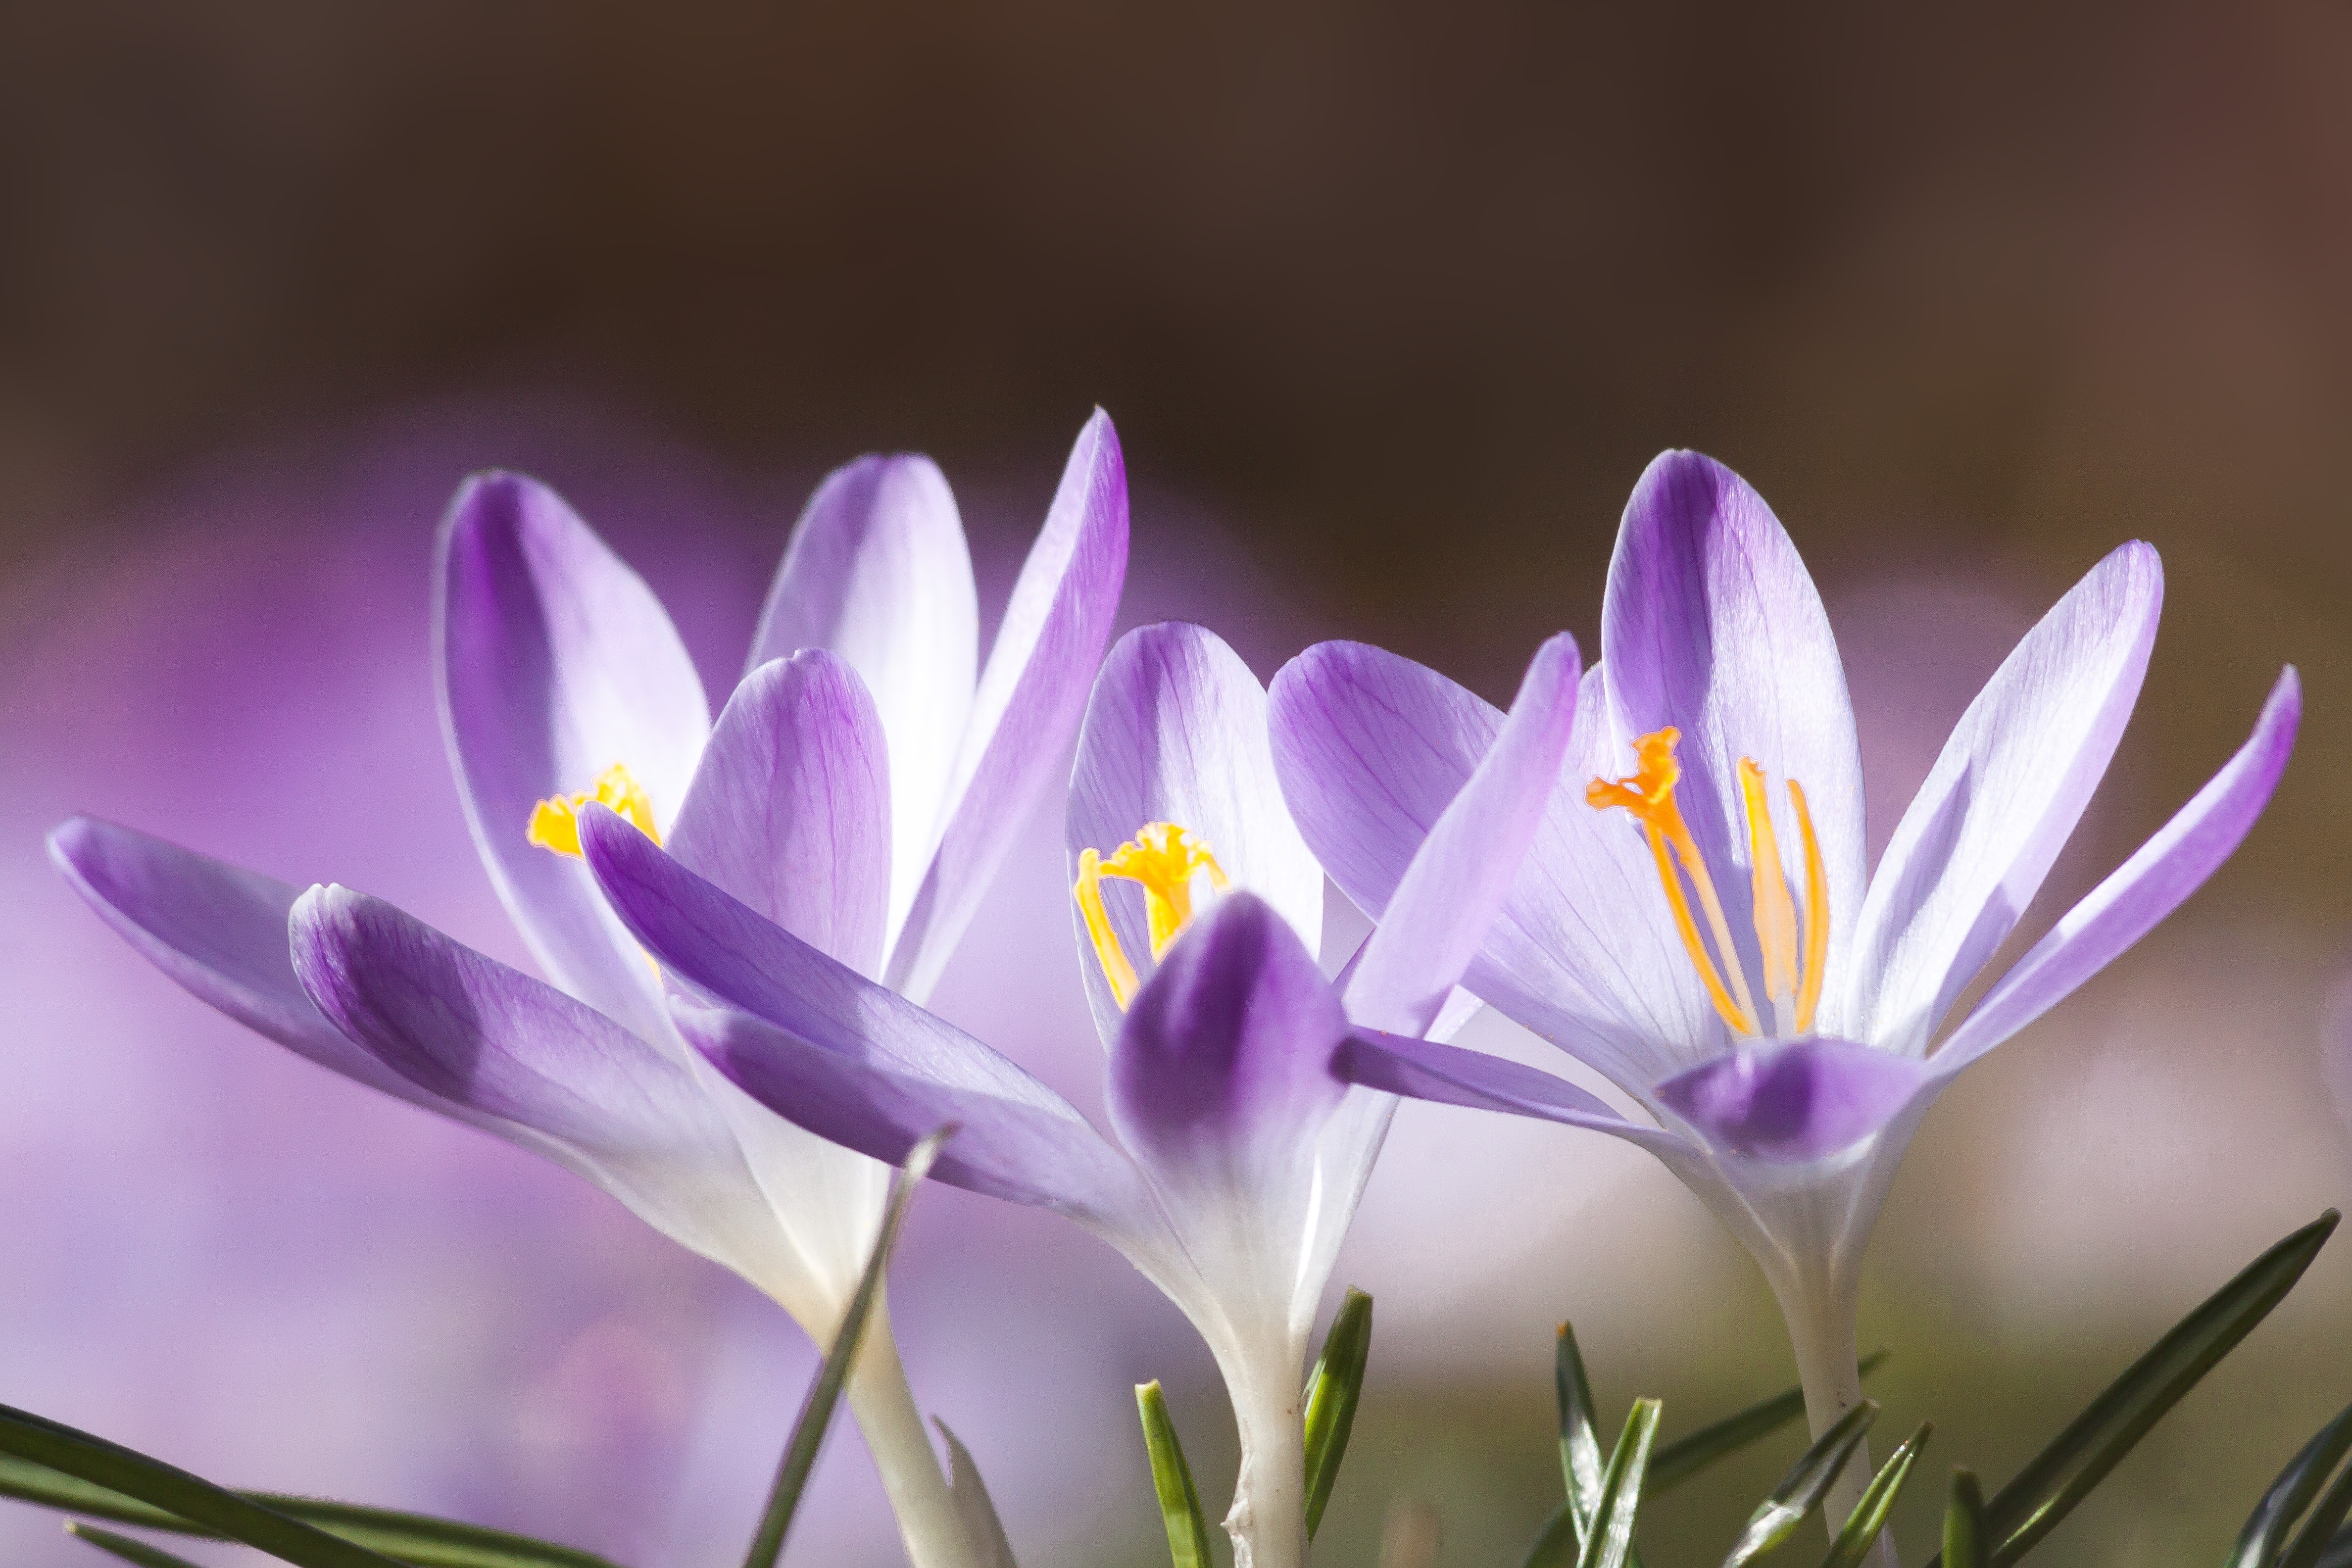 purple crocus flowers in bloom close-up photo